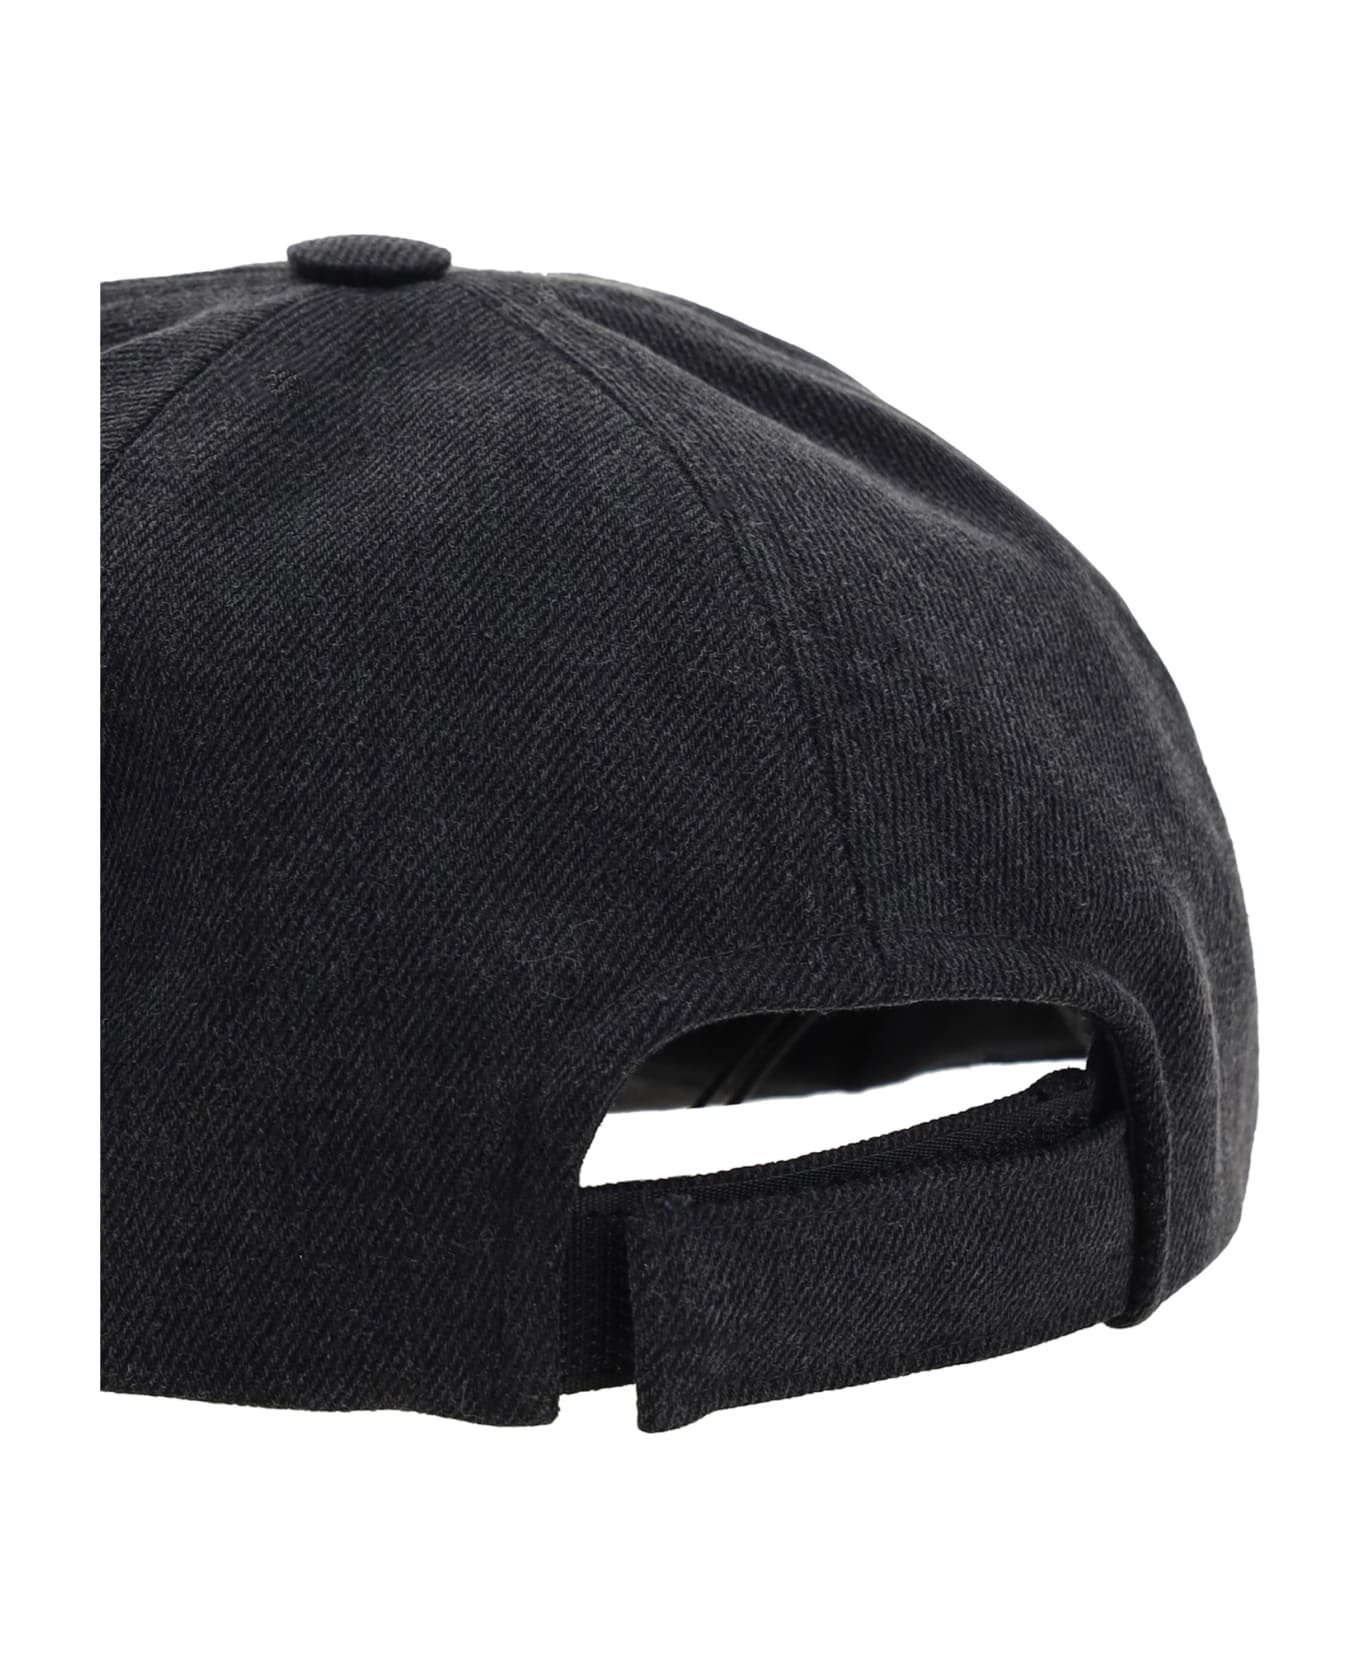 Isabel Marant Baseball Cap - Grey 帽子